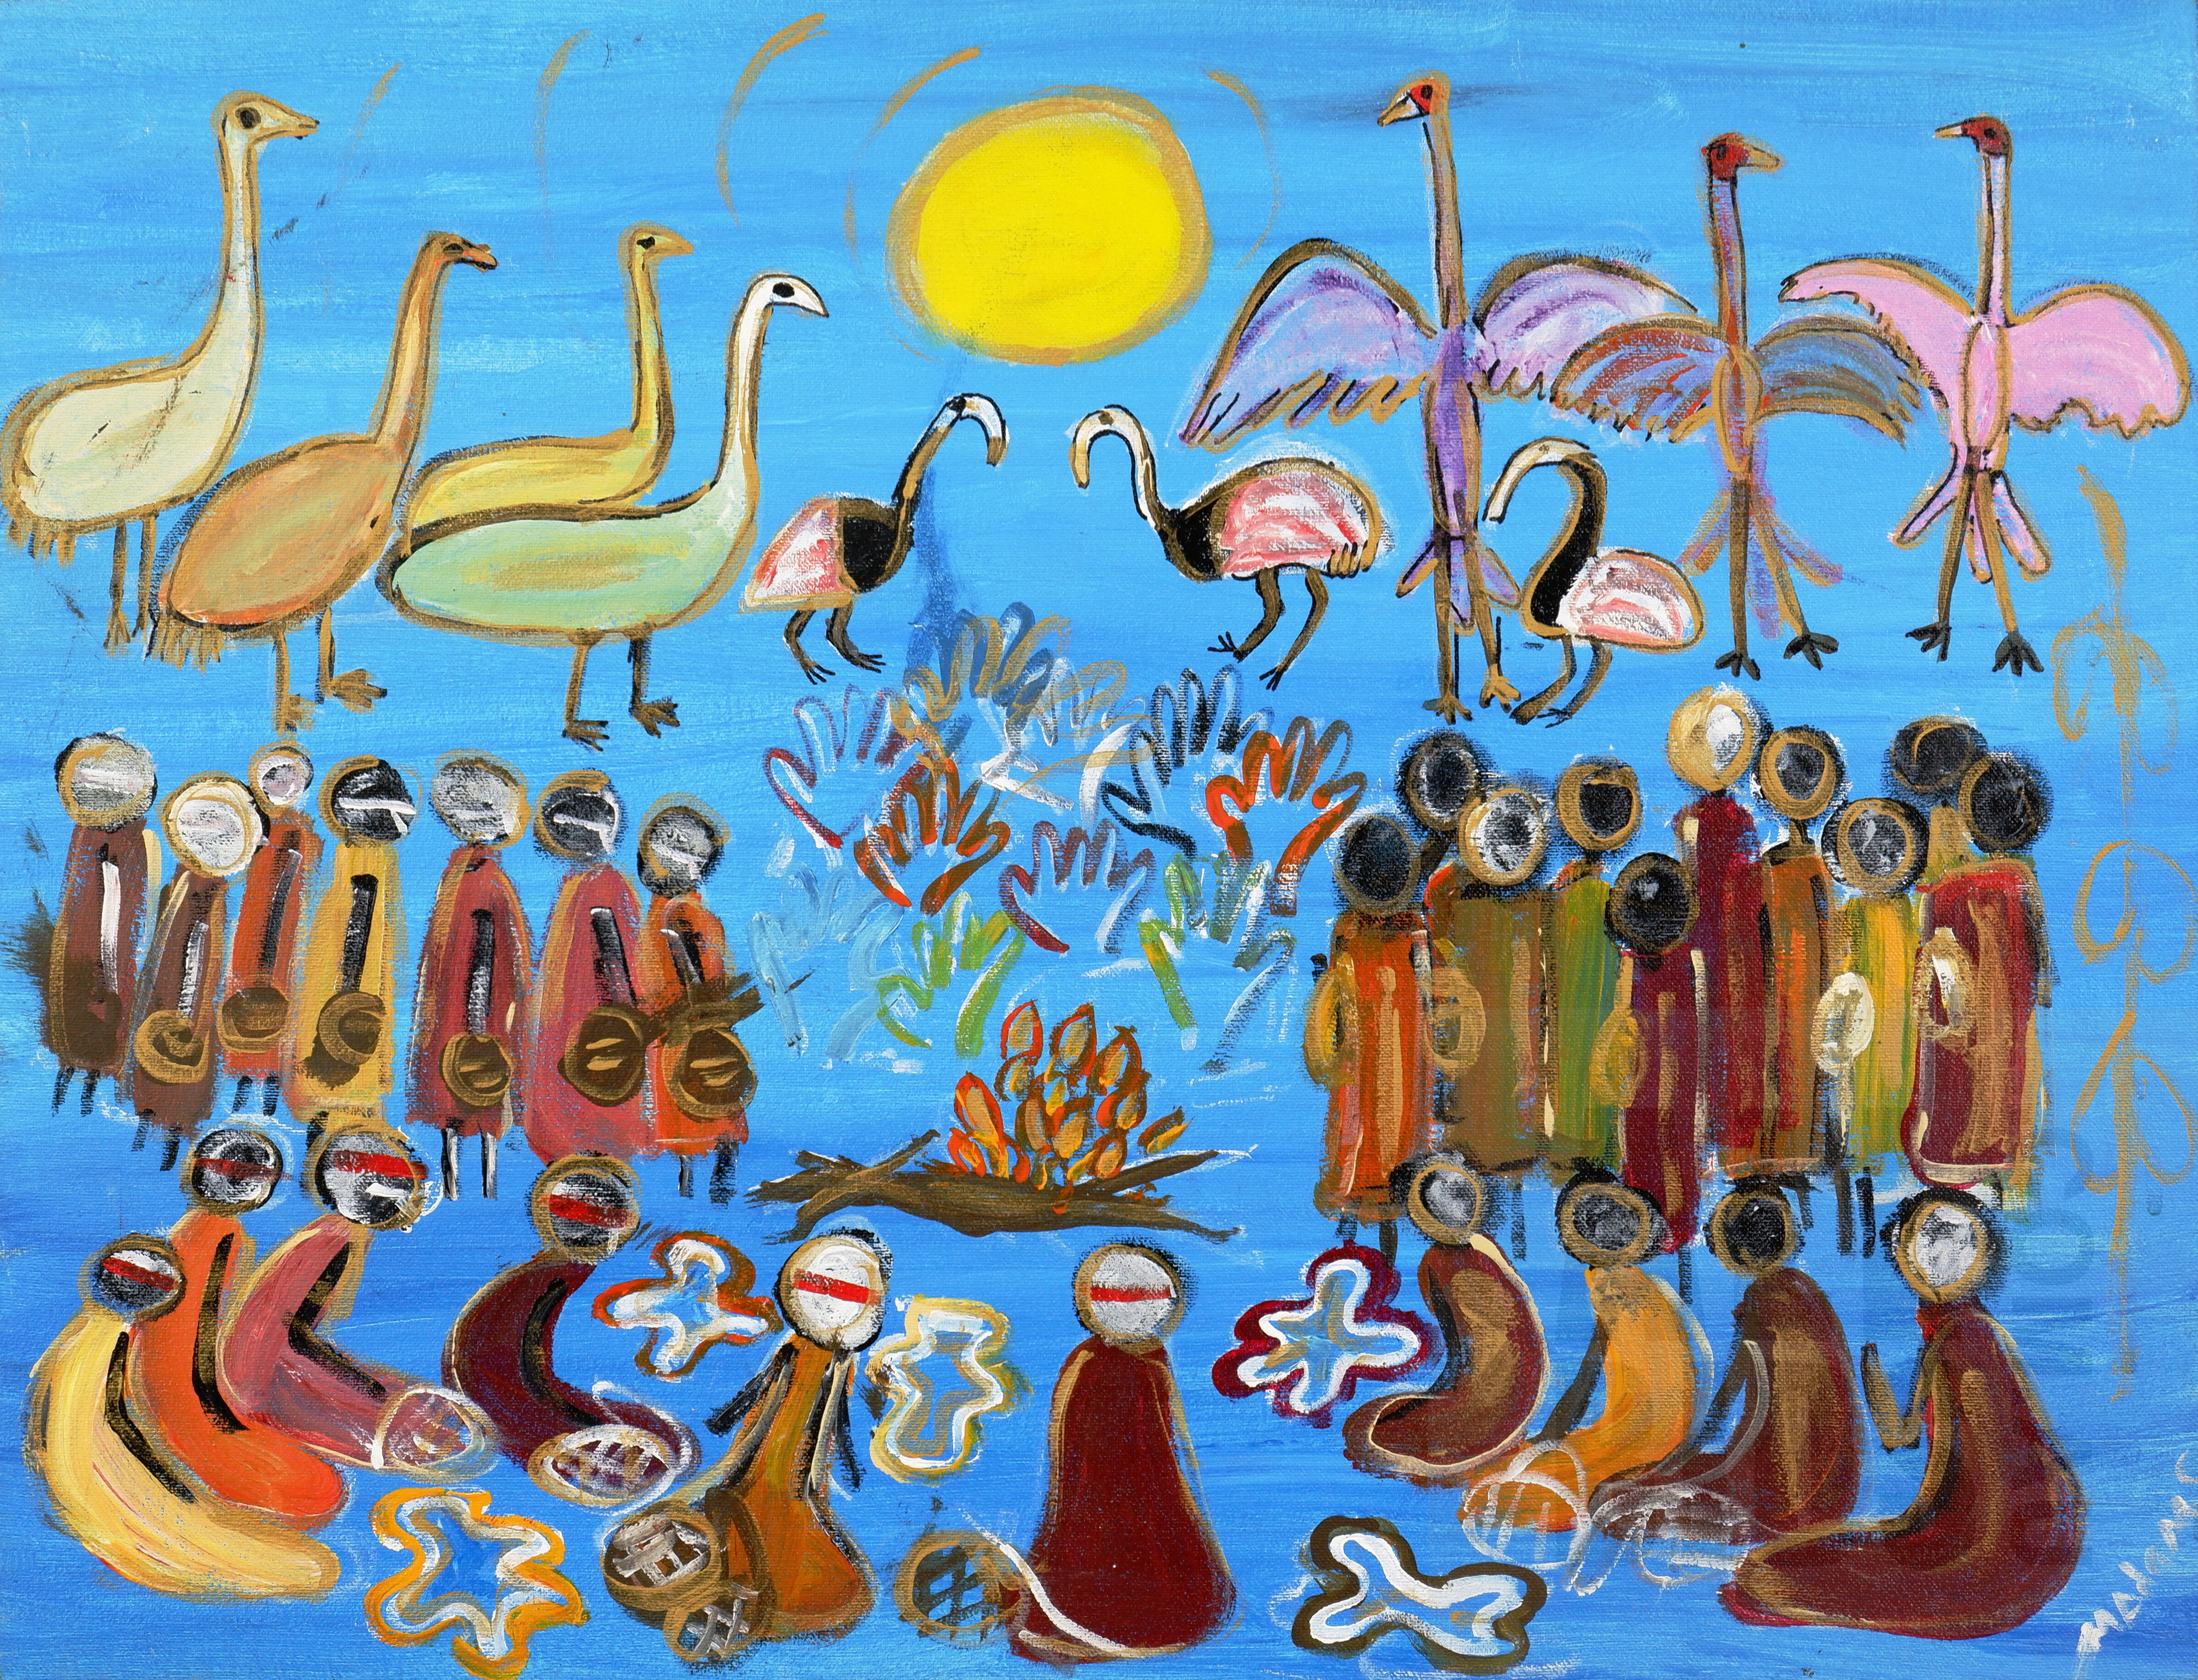 'Margaret Adams (born 1942, Kamilaroi language group), Corroboree with Animals, Moree New South Wales, Acrylic on Canvas, 45 x 59 cm'